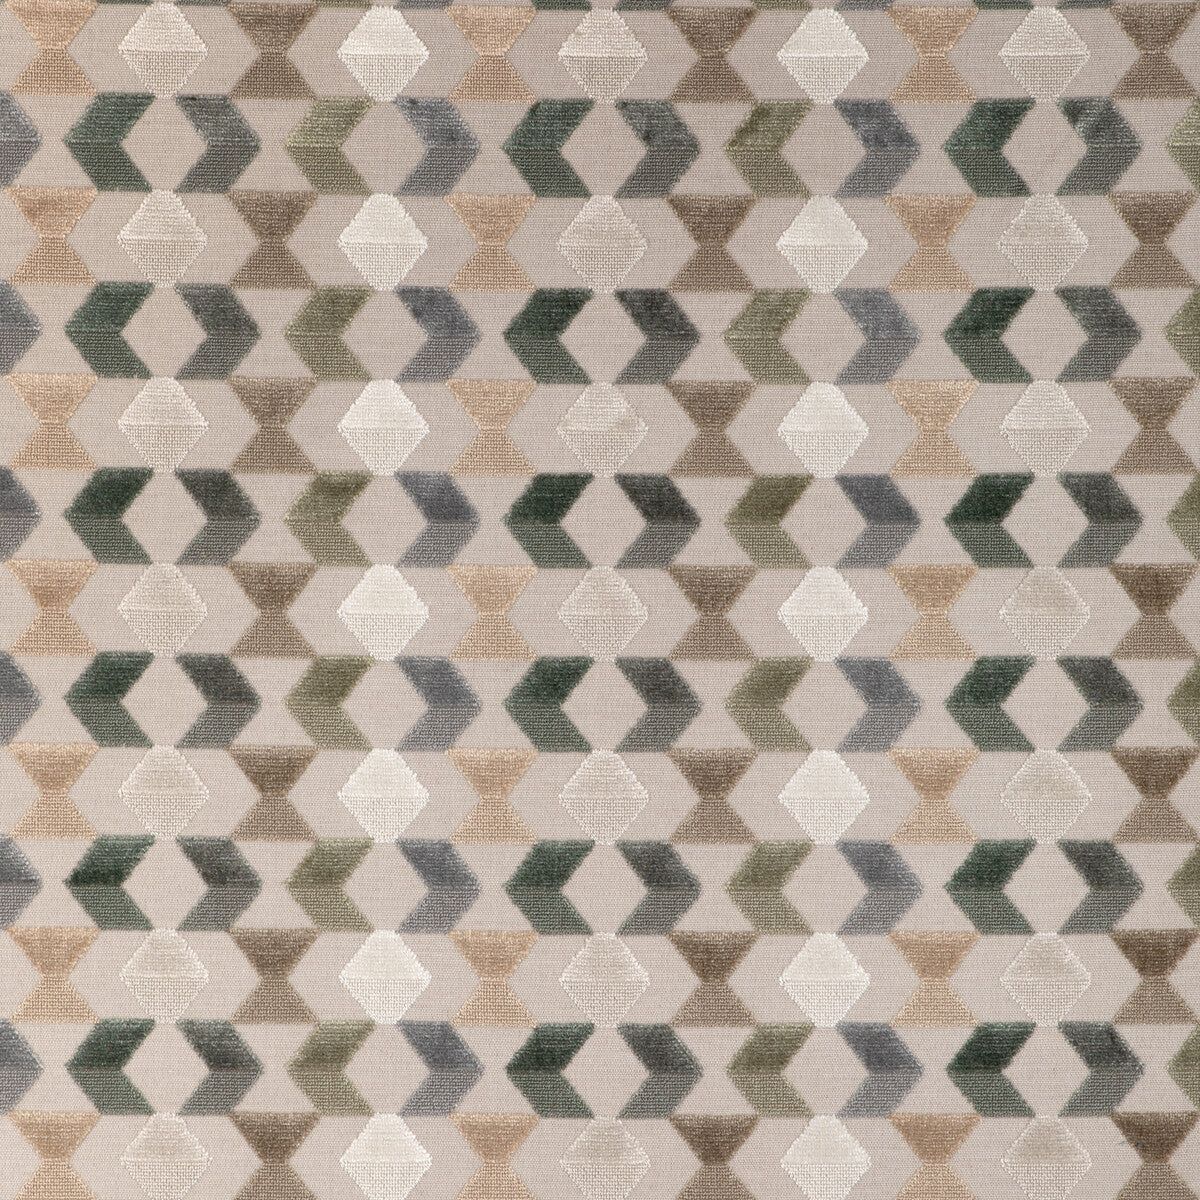 Kravet Design fabric in 36979-335 color - pattern 36979.335.0 - by Kravet Design in the Modern Velvets collection